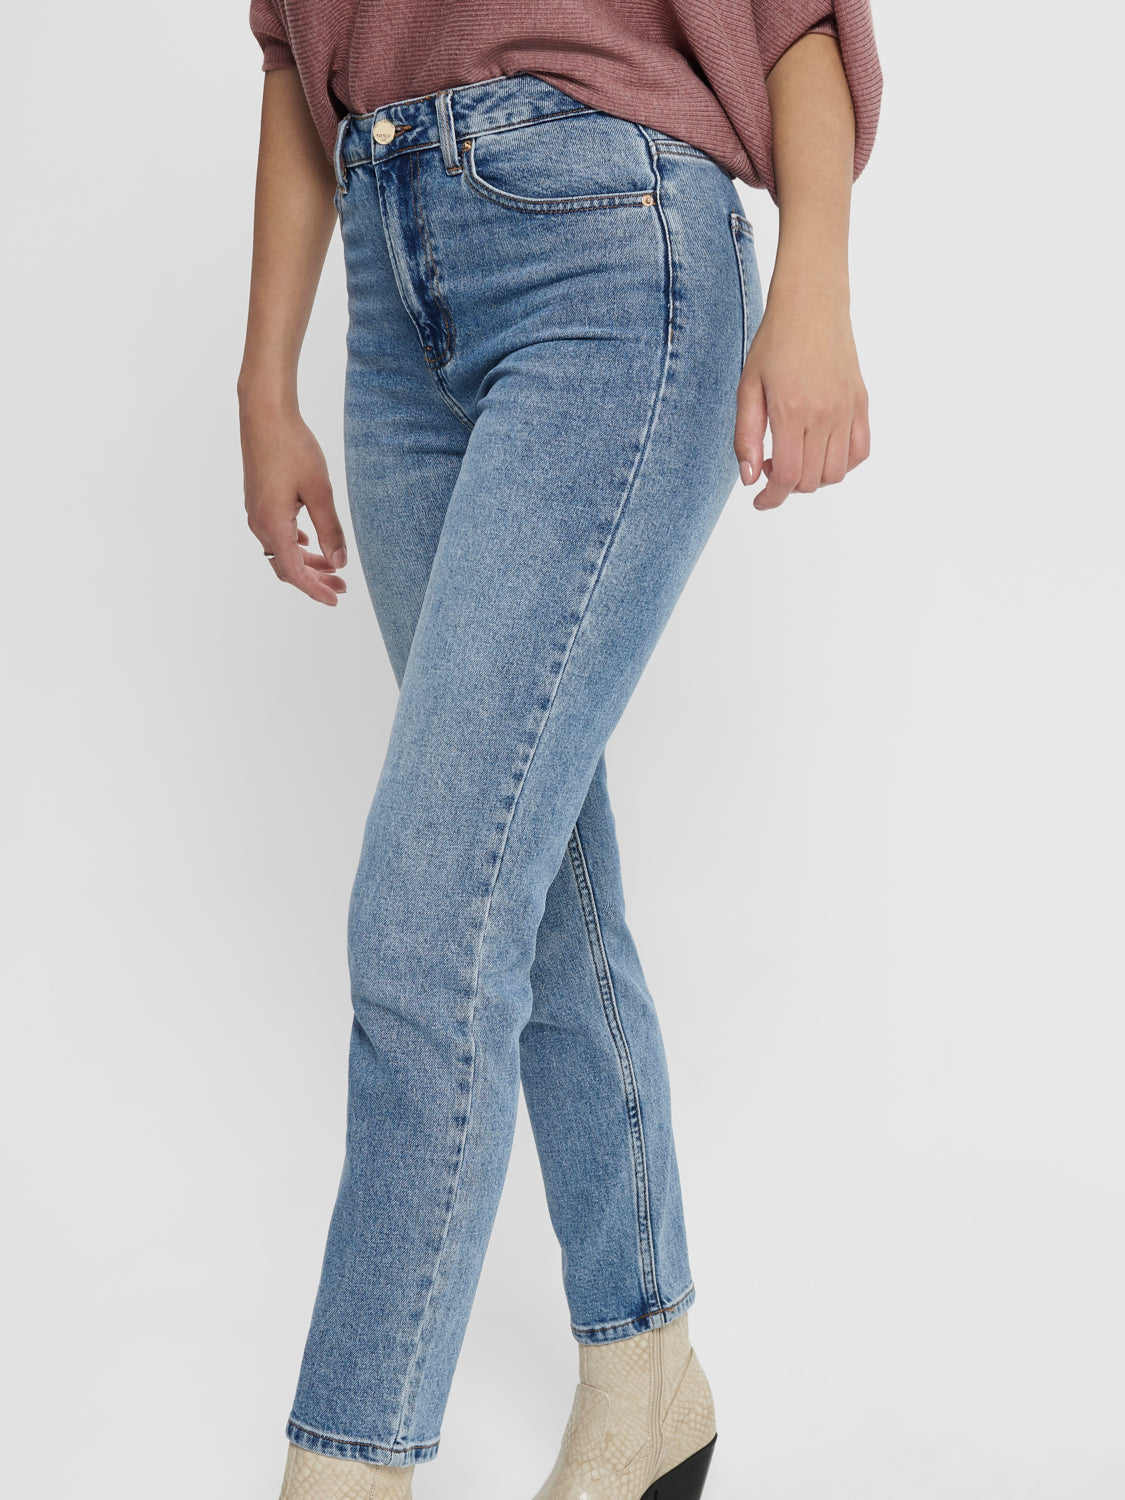 ONLEMILY Jeans - Medium Blue Denim